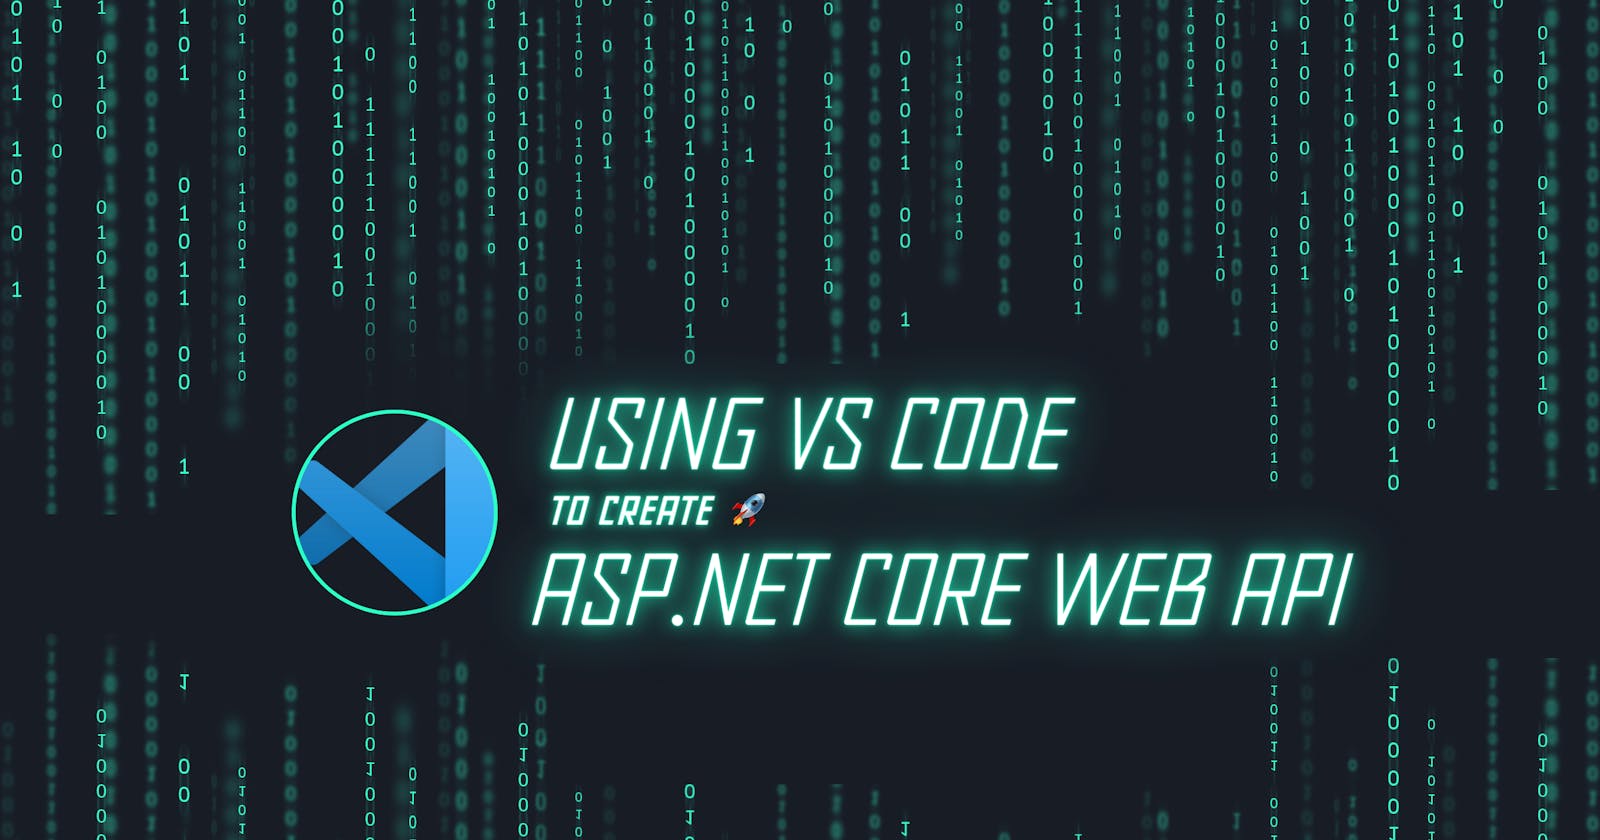 Setting up VS Code for Developing Asp.Net Core Web API